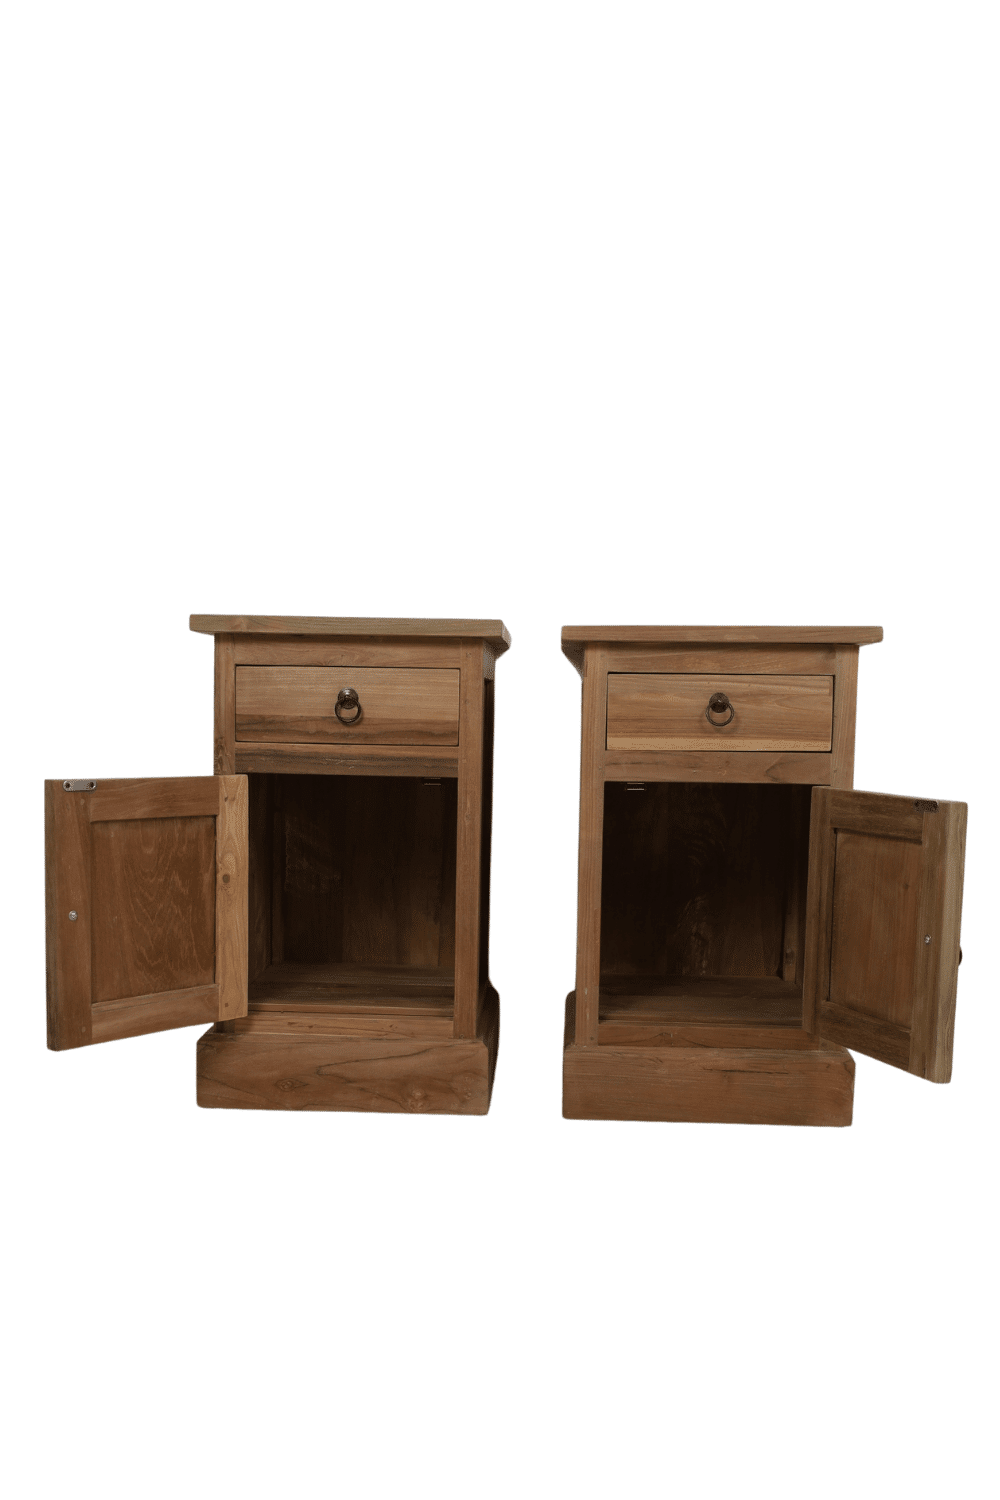 teak houten nachtkastjes met lade en deur van hout